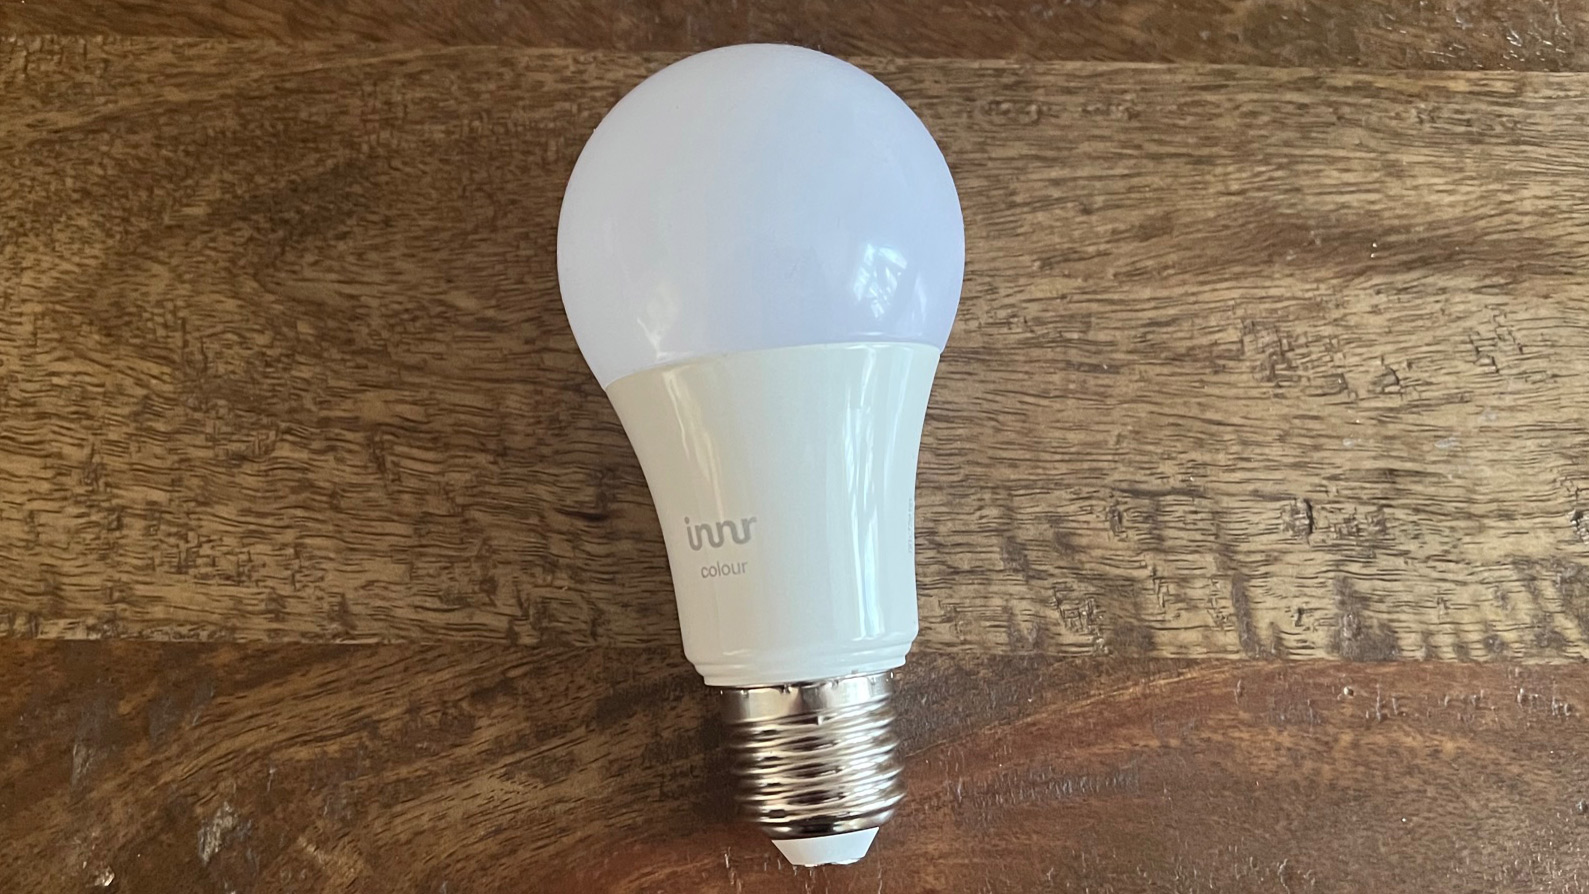 Warna Innr Smart Bulb di atas meja